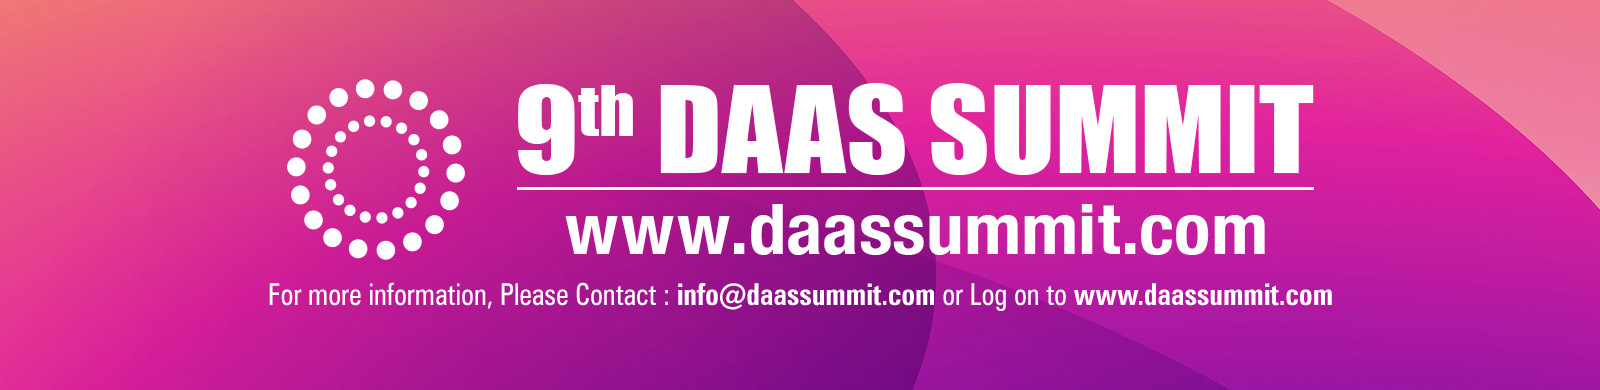 Daas Summit Banner 2020